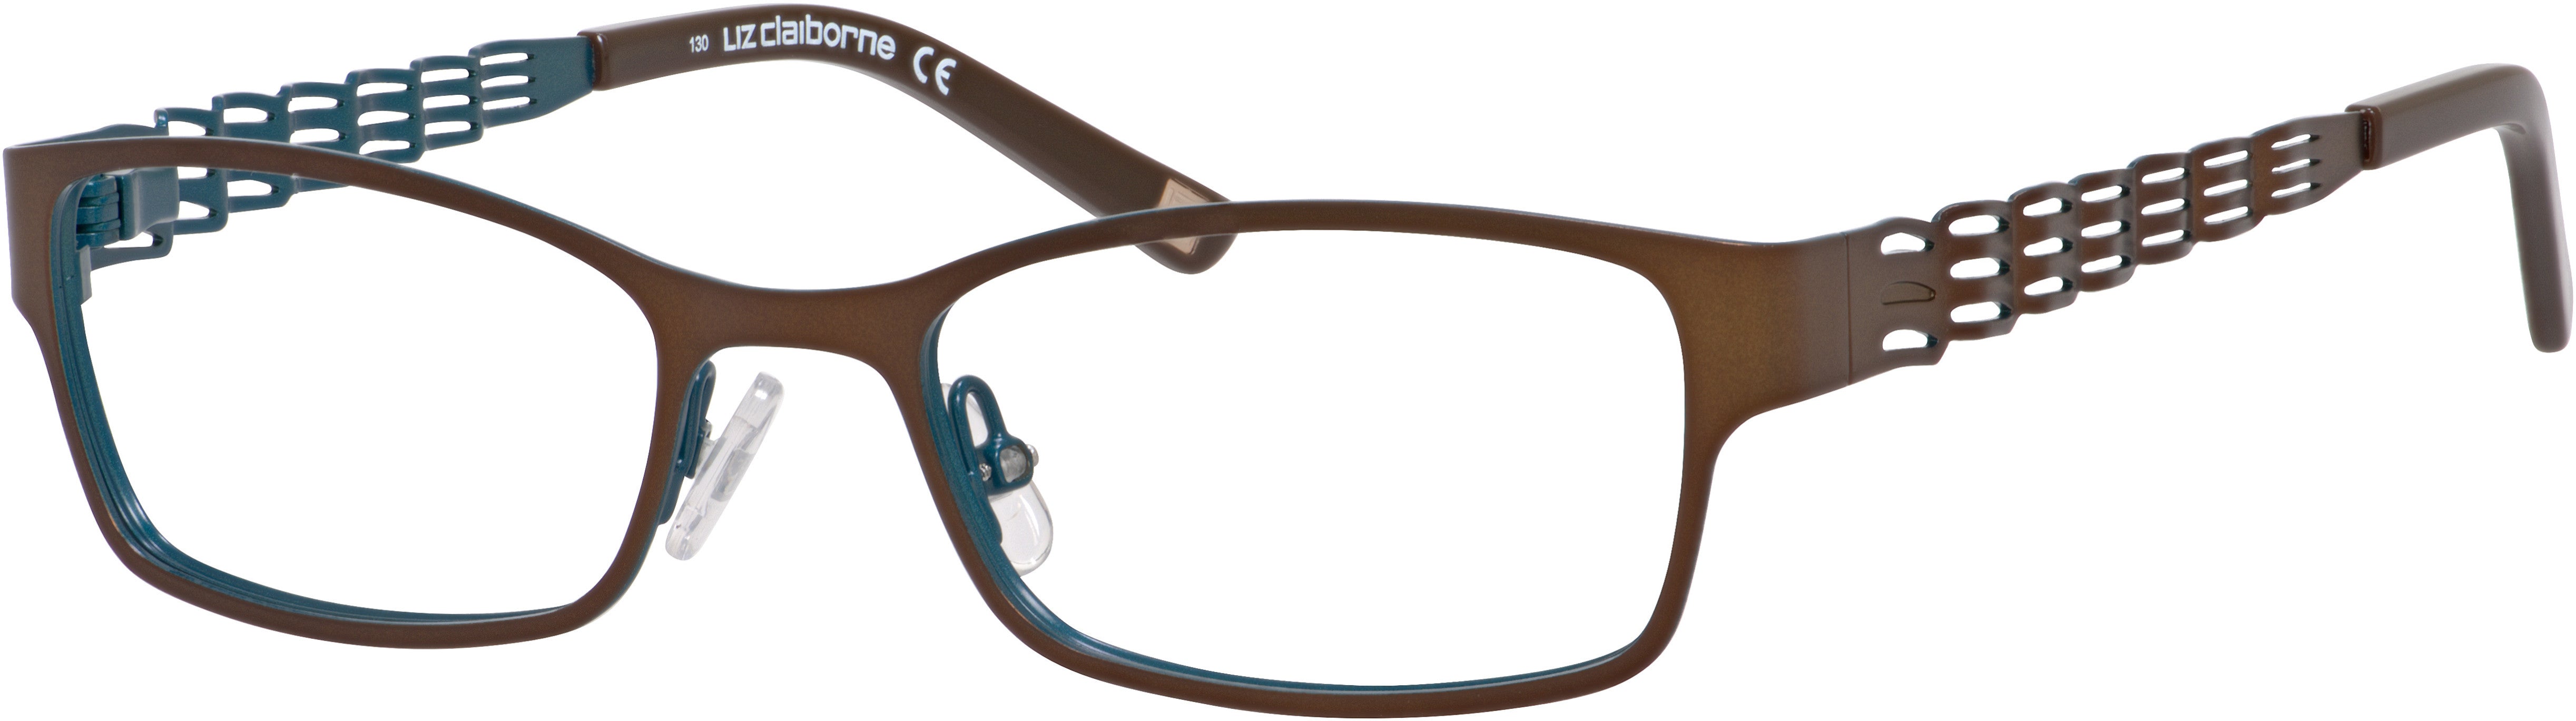  Liz Claiborne 431 Rectangular Eyeglasses 0JBP-0JBP  Brown (00 Demo Lens)